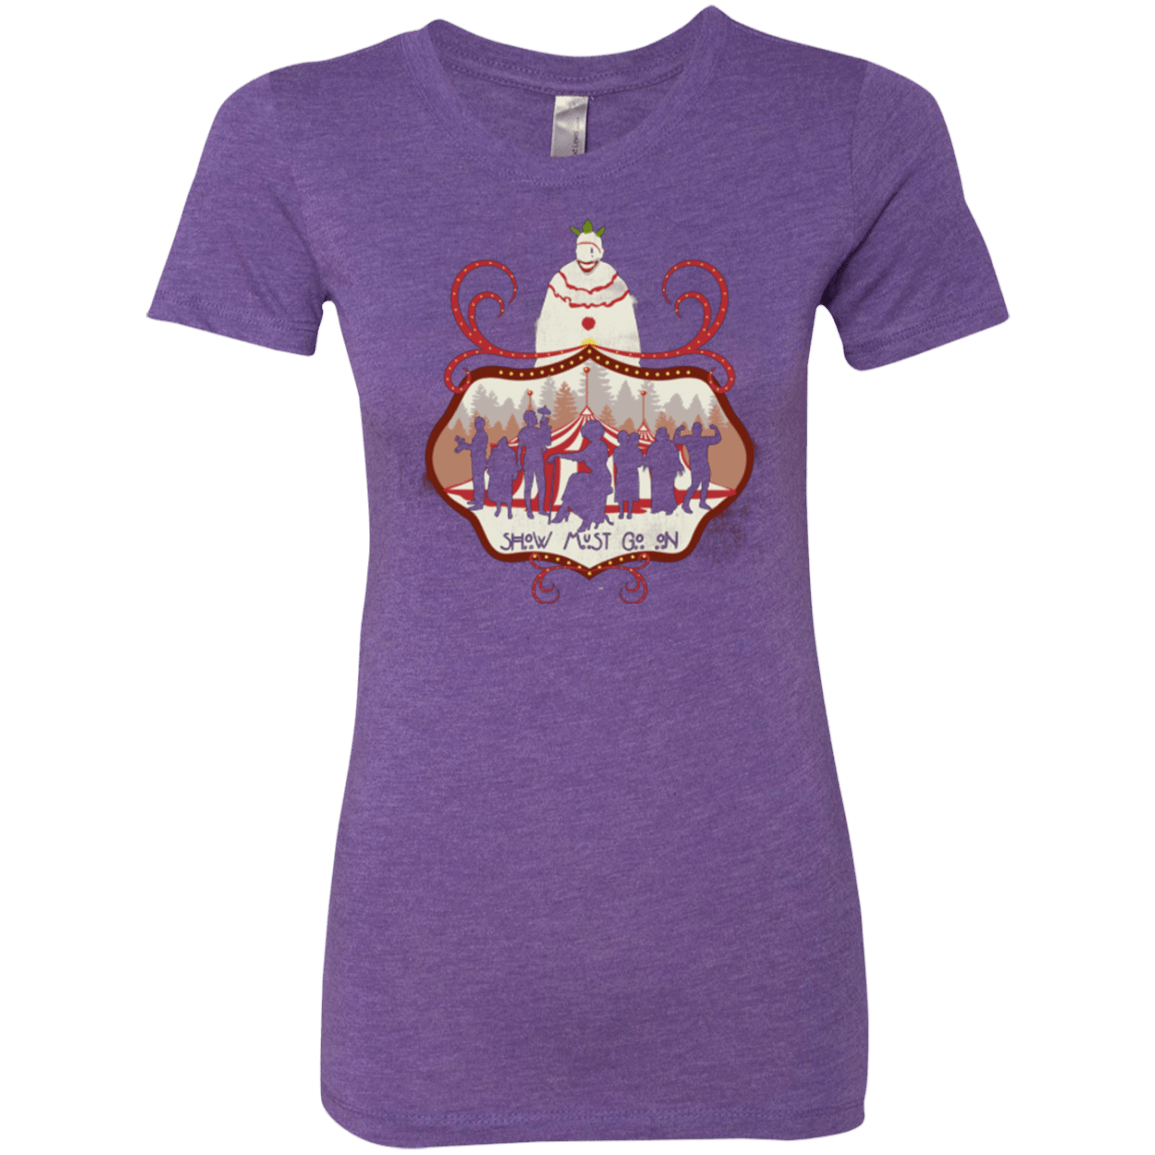 T-Shirts Purple Rush / Small Freakshow Women's Triblend T-Shirt